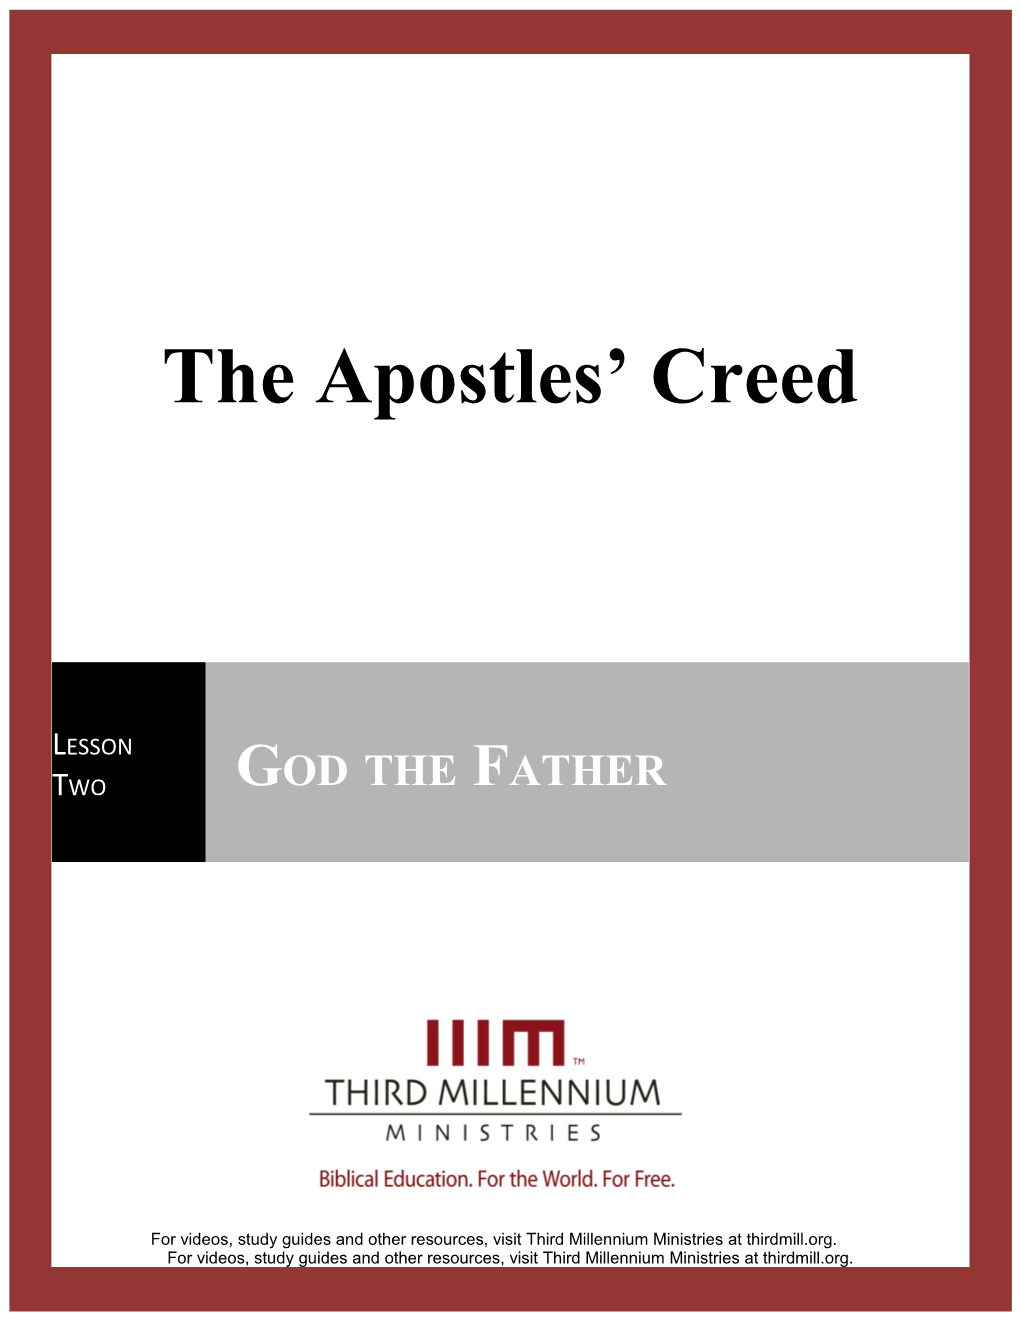 The Apostles' Creed, Lesson 2